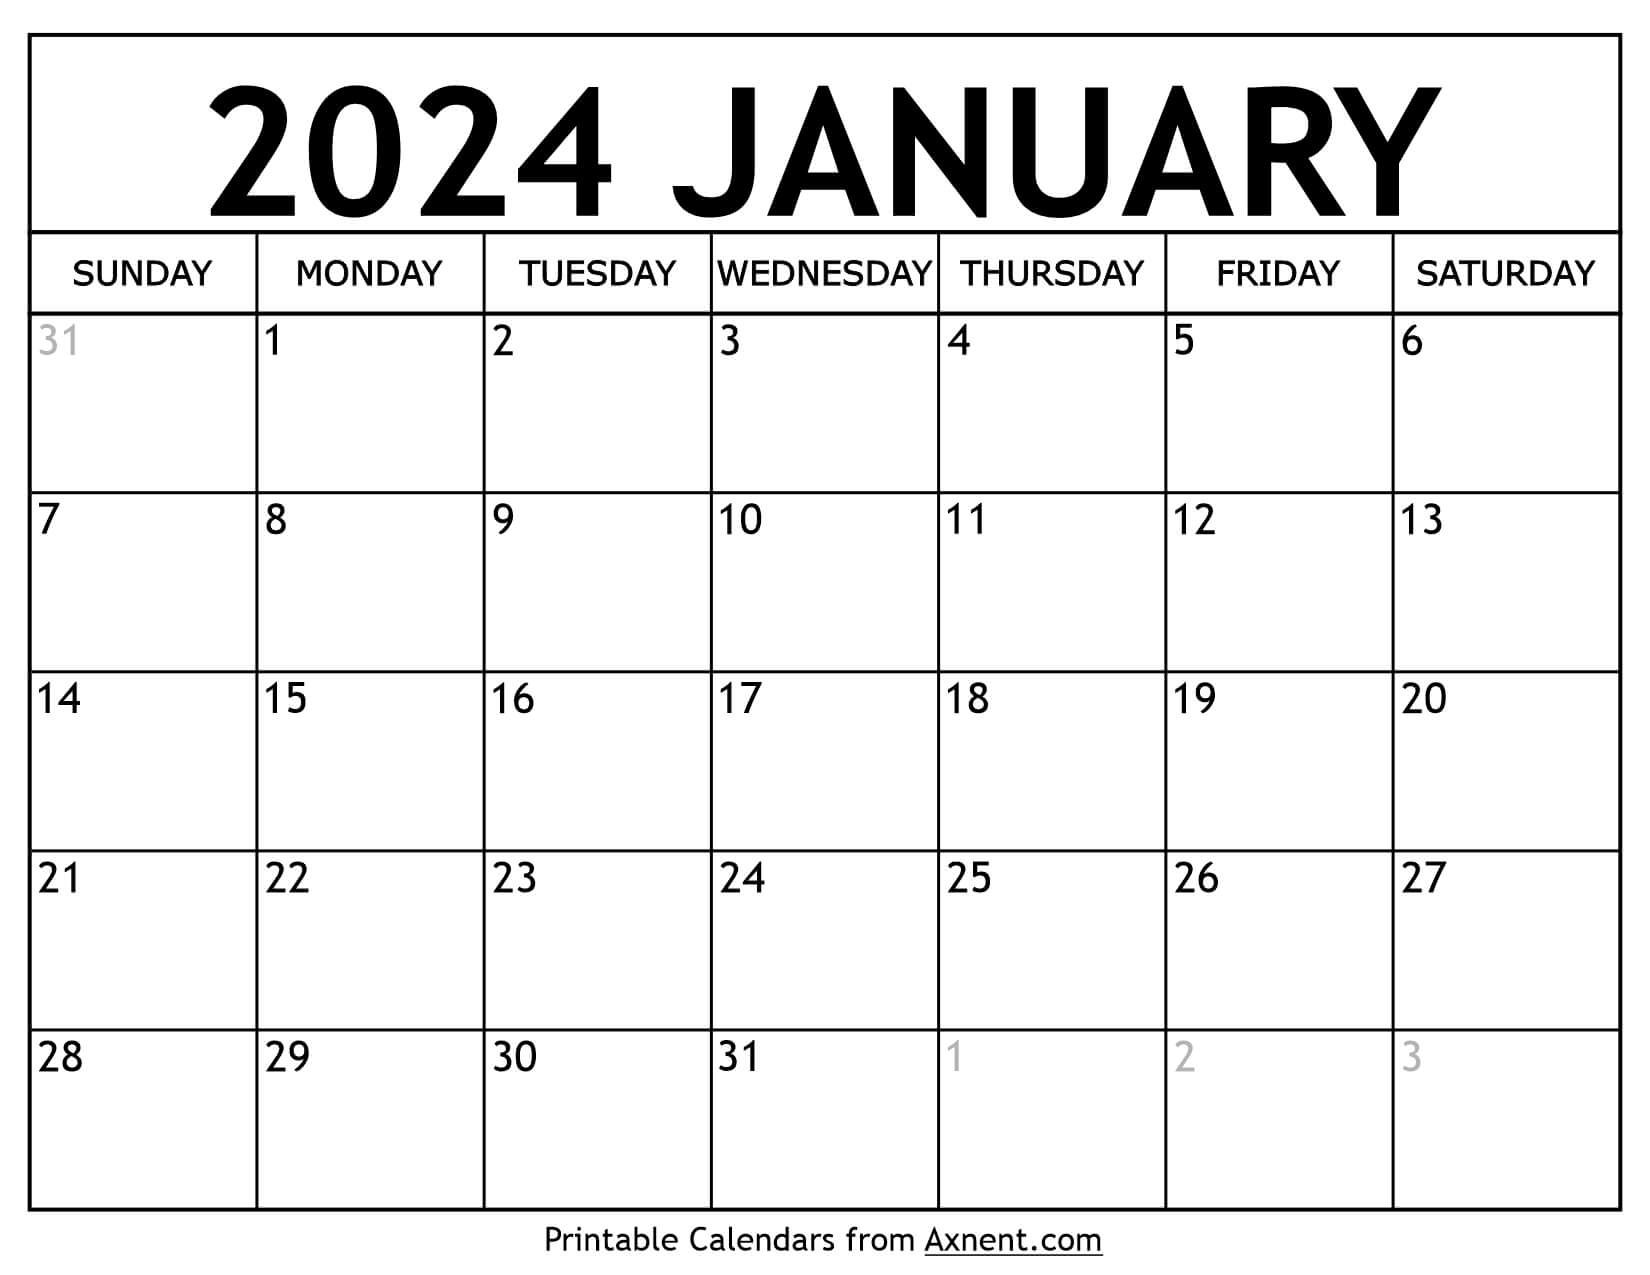 Printable January 2024 Calendar Template - Print Now for January 2024 Printable Calendar Free